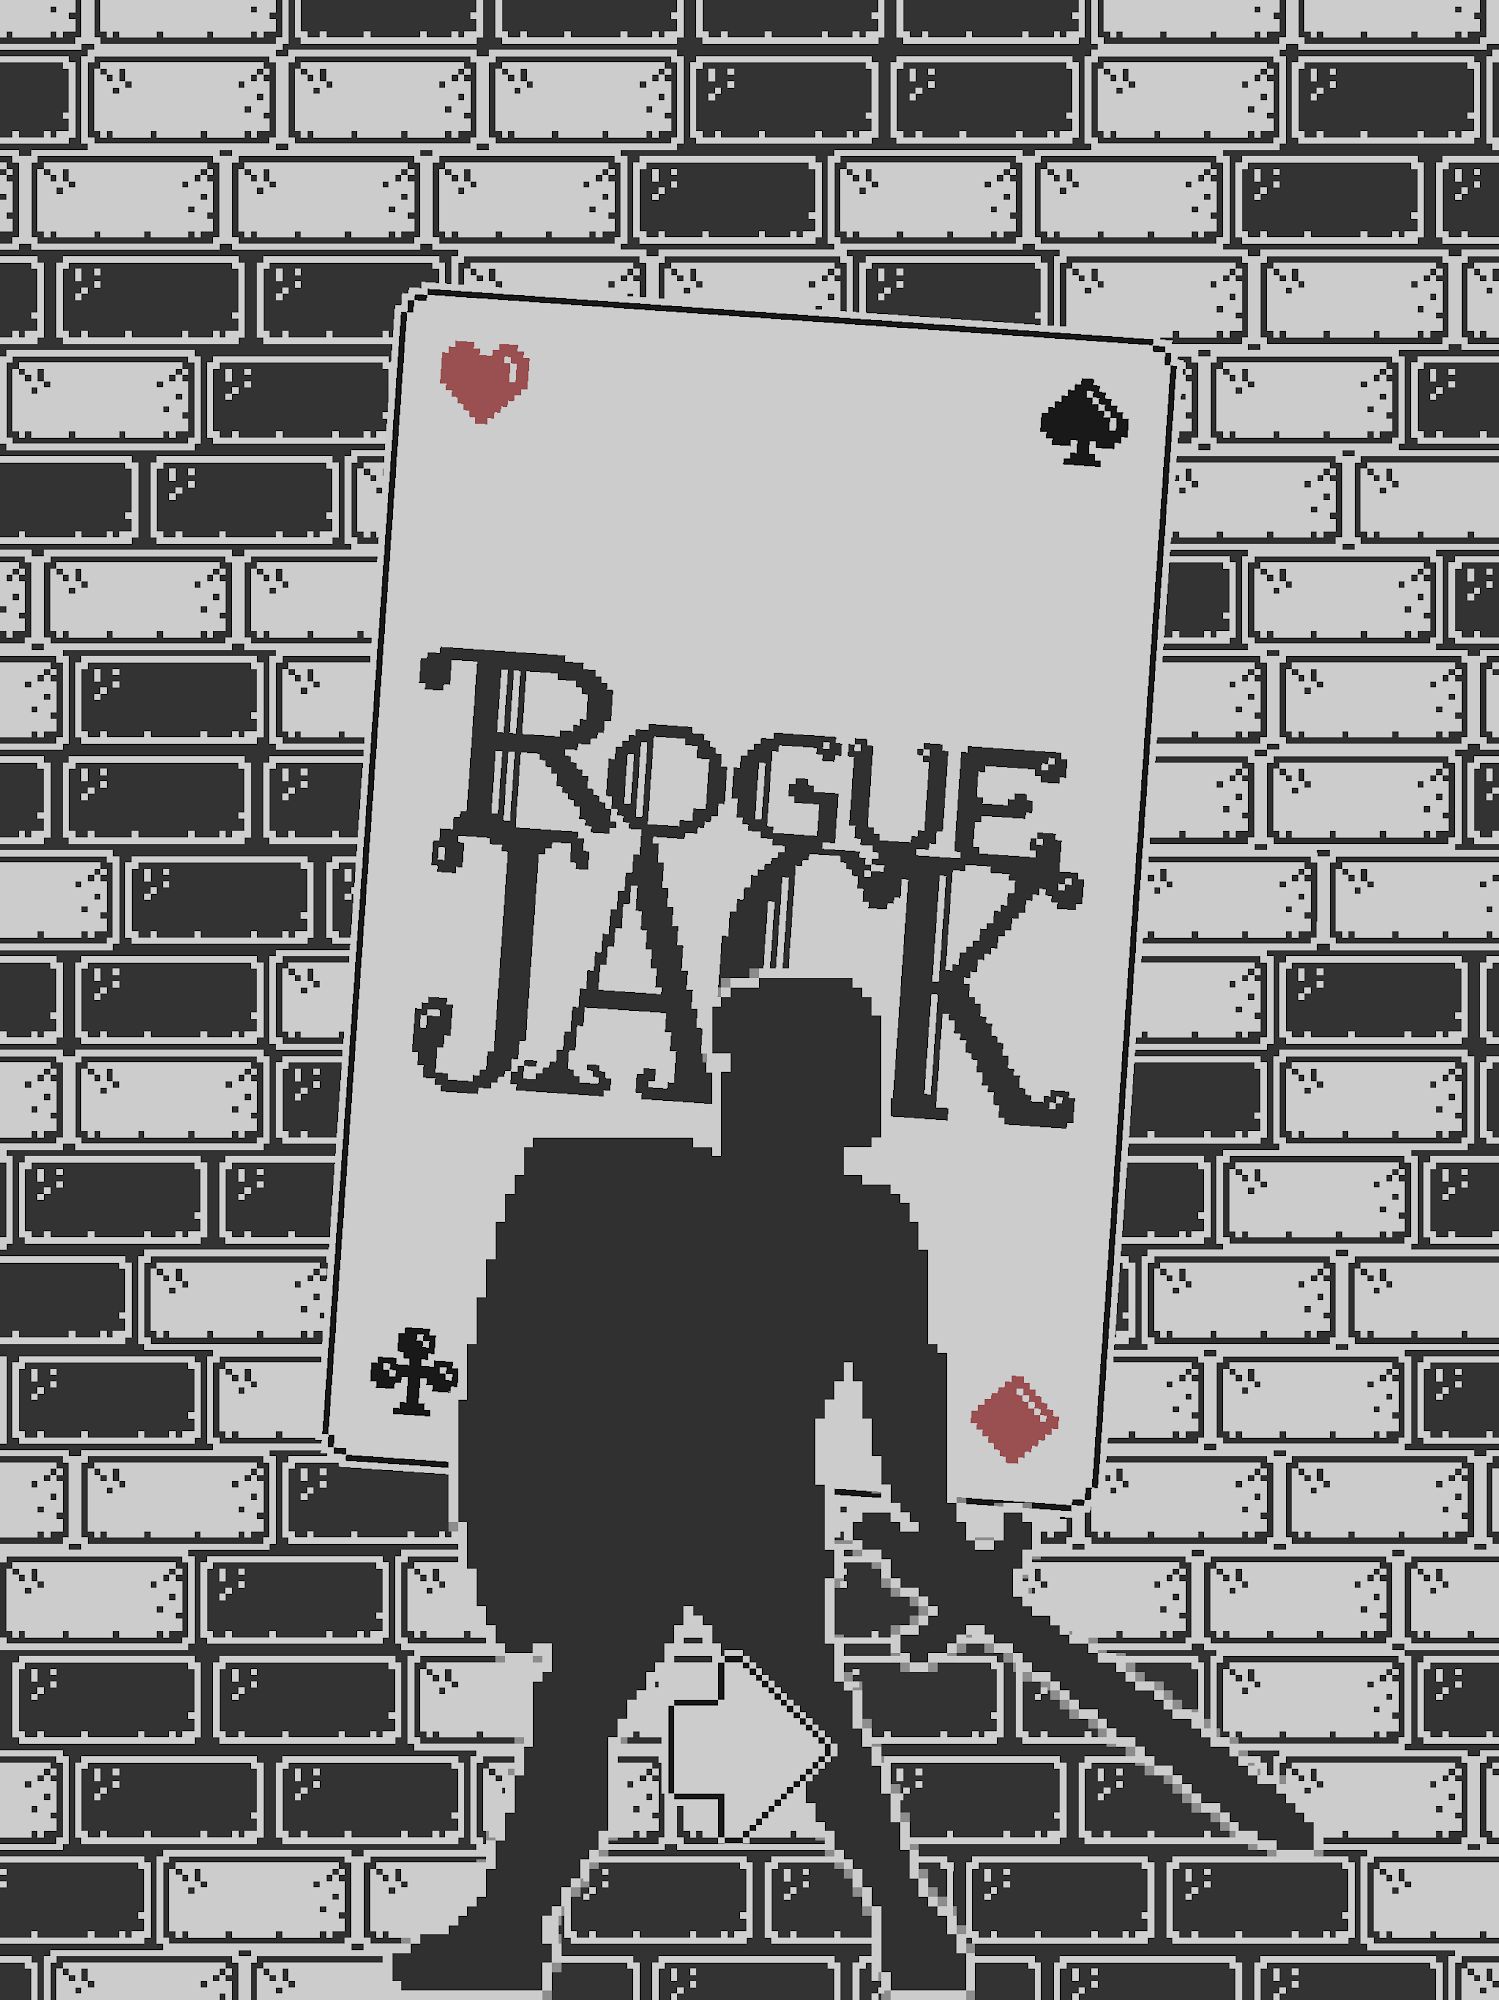 Download RogueJack: Roguelike BlackJack Android free game.